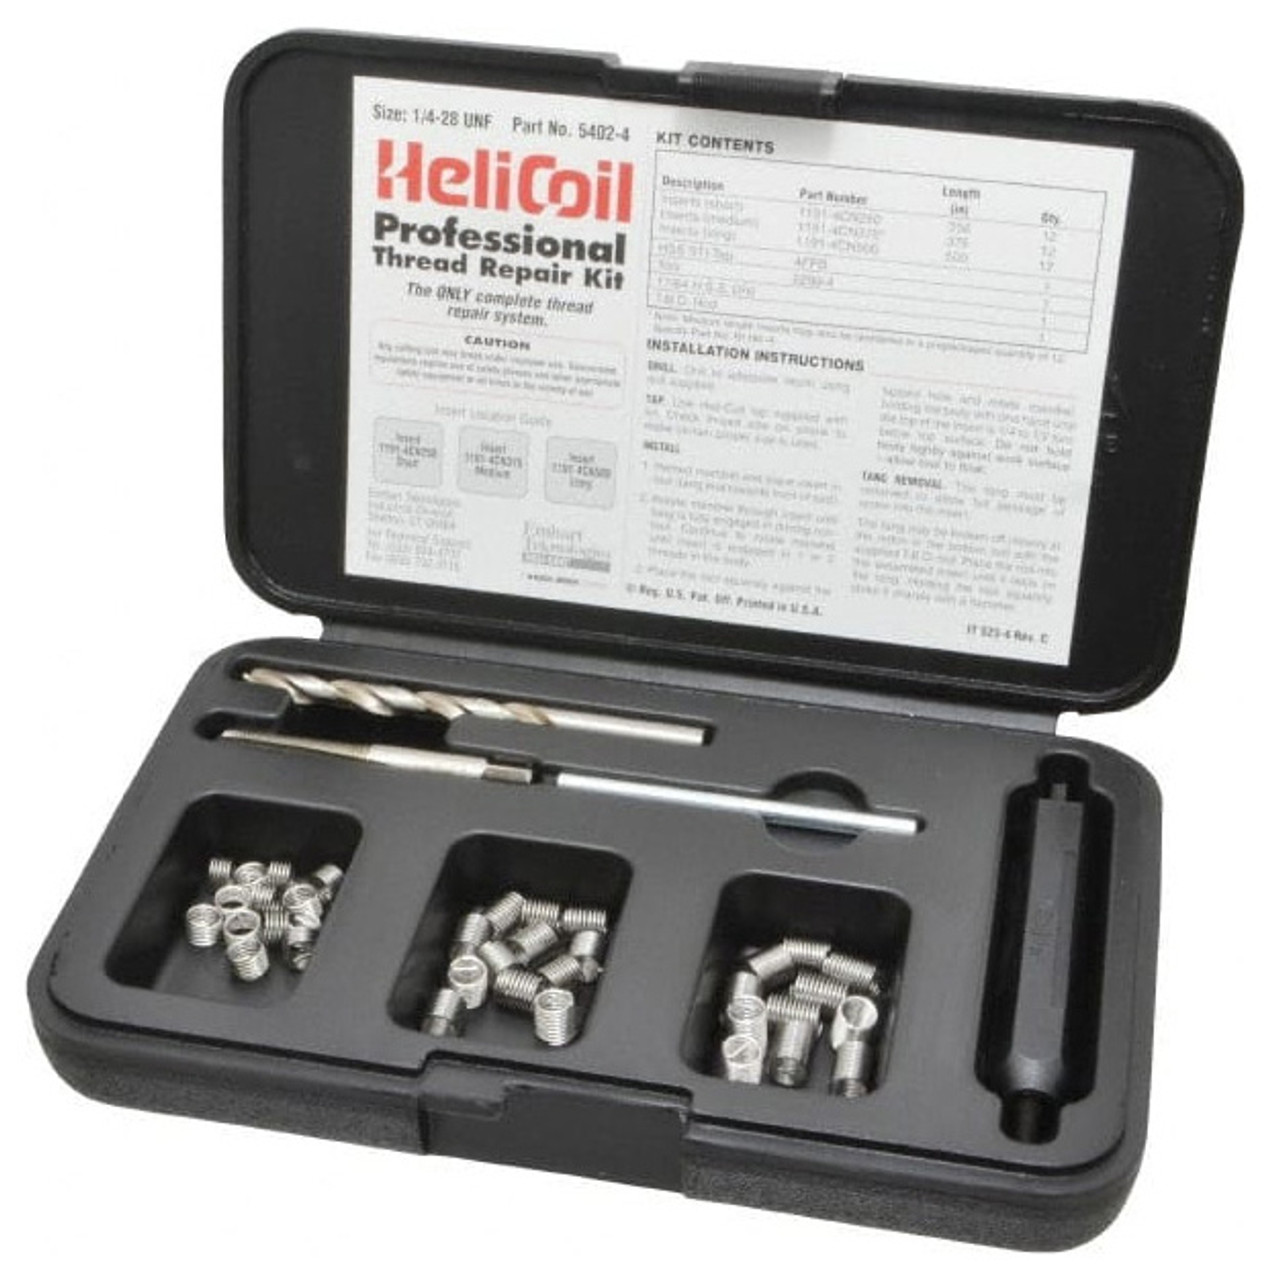 HeliCoil Screw Thread Insert Thread Repair Kit #5402-4, 1/4 - 28 UNF Threads,  0.375 Insert Length - 61-778-7 - Penn Tool Co., Inc